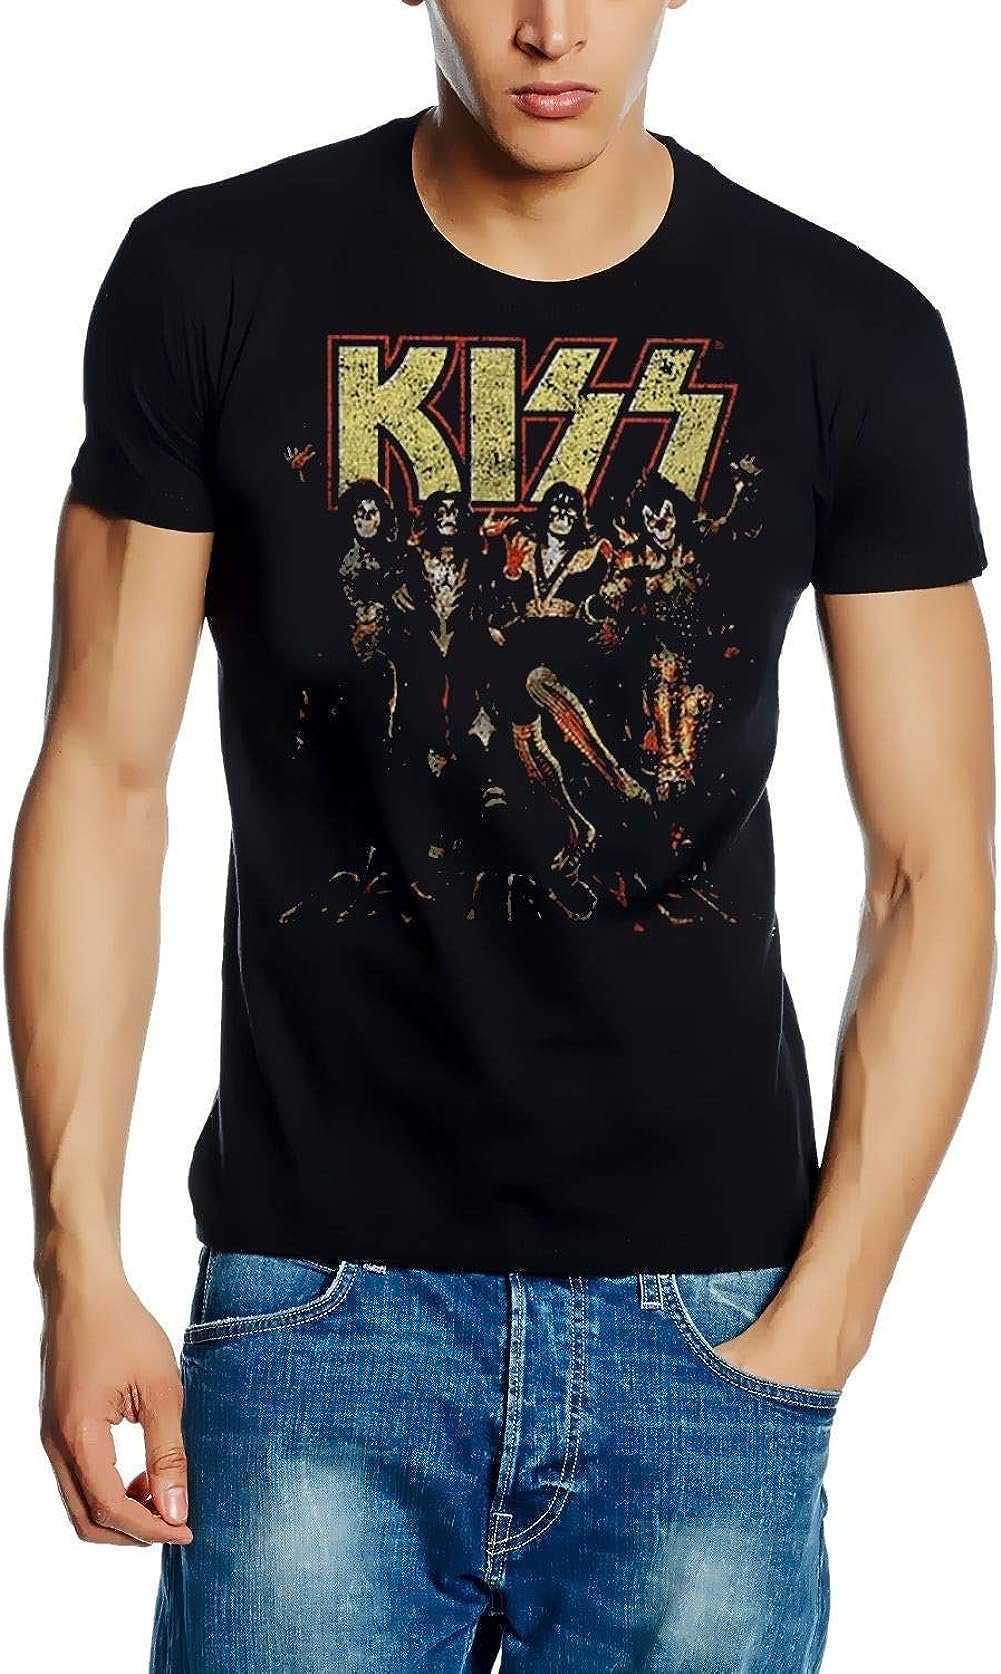 coole-fun-t-shirts Print-Shirt Bandshirt XL XXL L Skull-Line Tournee Schwarz KISS T-Shirt S T-Shirt KISS Herren M